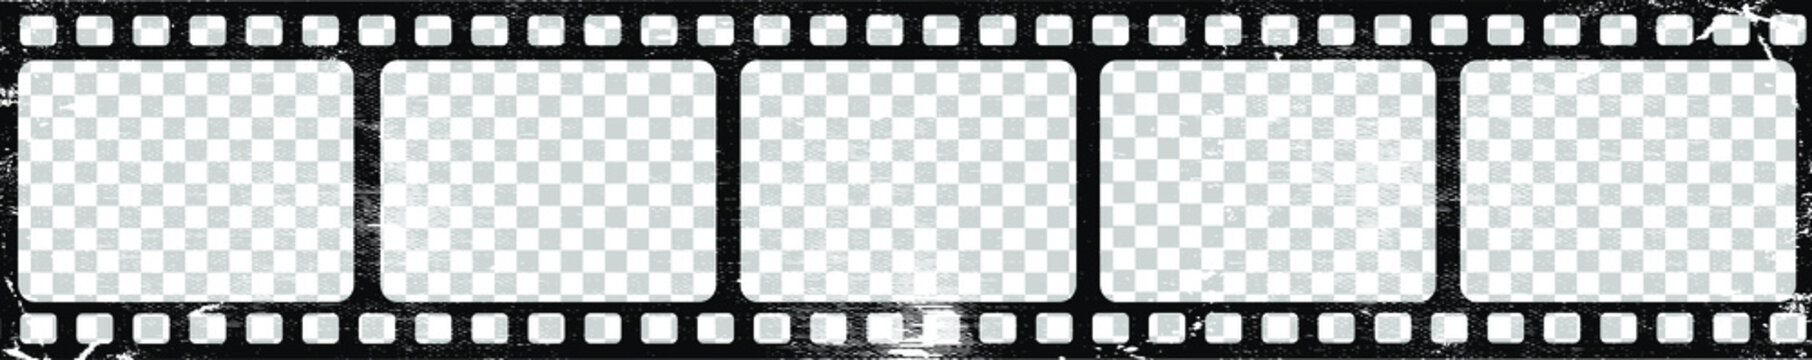 Grunge film strips collection on transparent background. Old retro cinema movie strip. Video recording. Vector illustration.